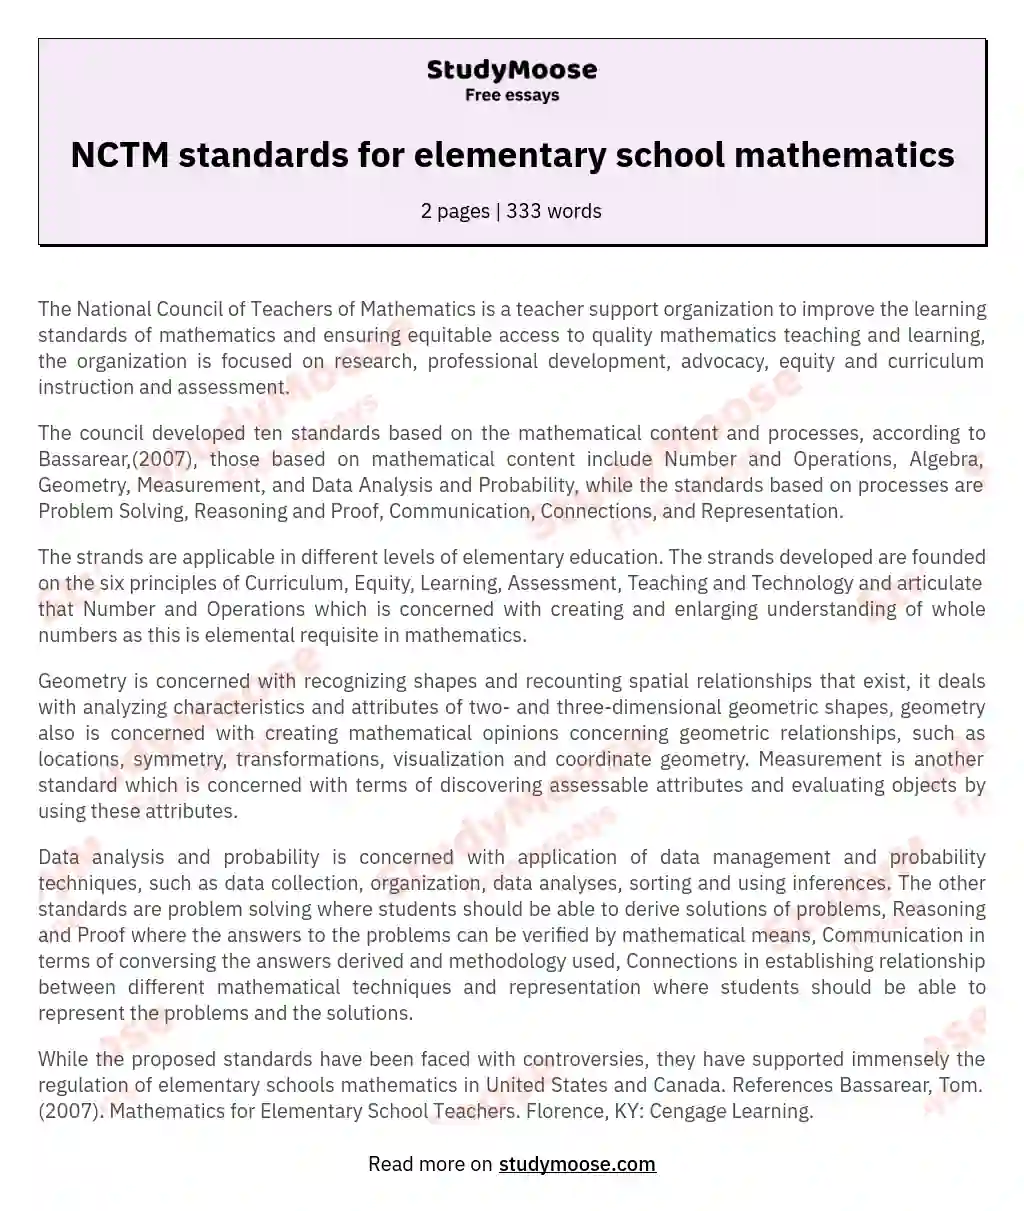 NCTM standards for elementary school mathematics